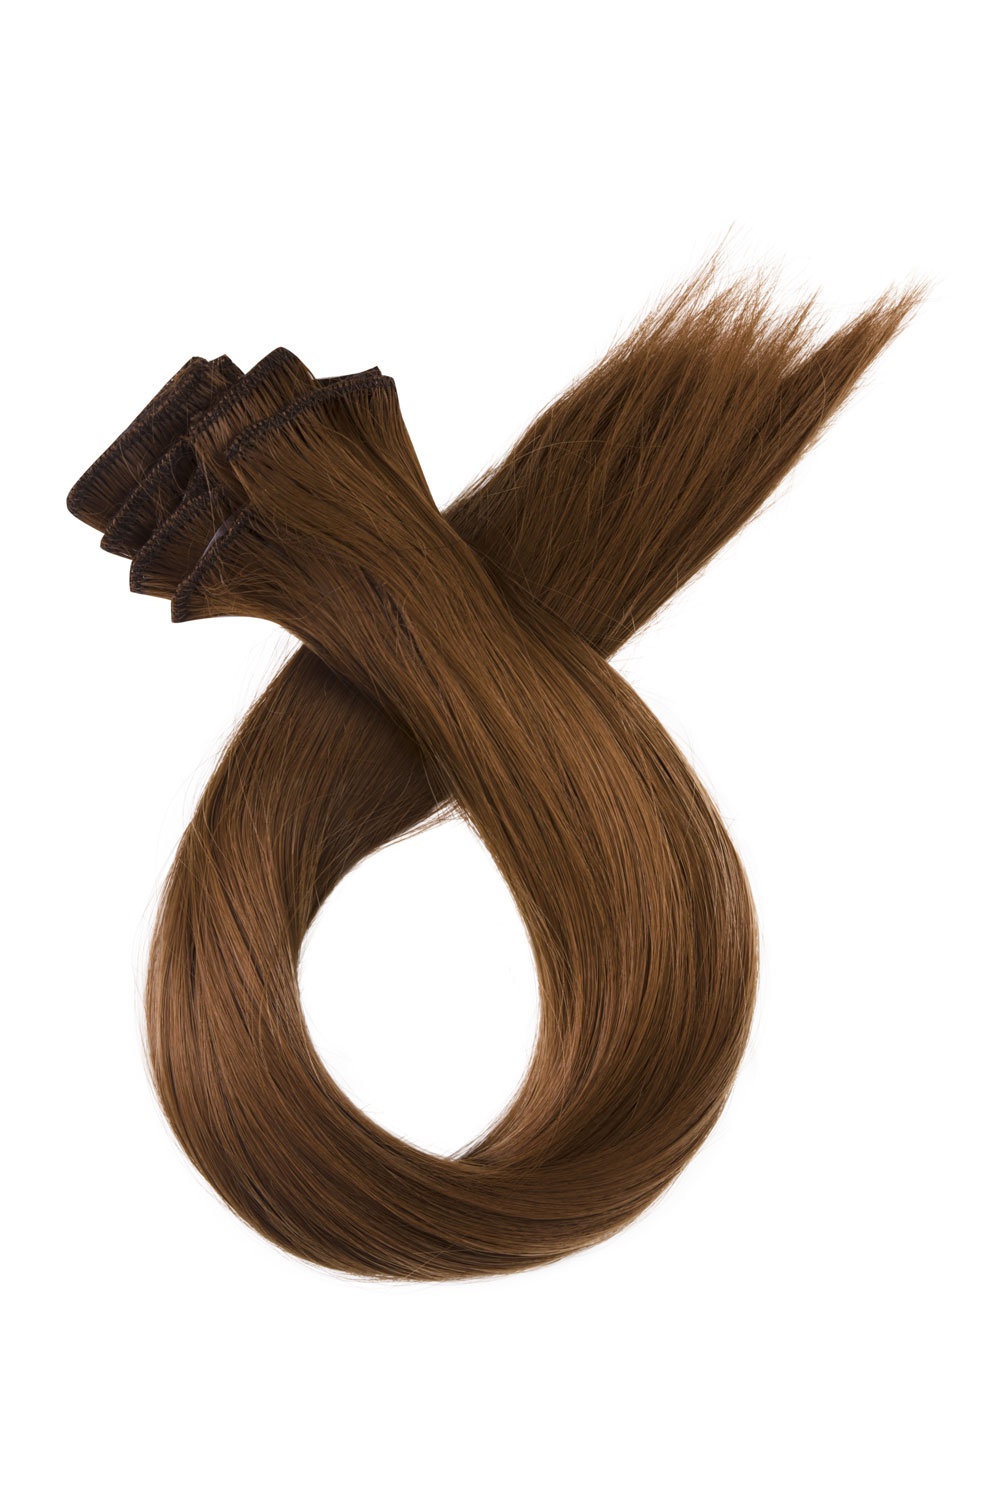 Svetlo hnedé clip in vlasy, 60cm, 180g, farba 12